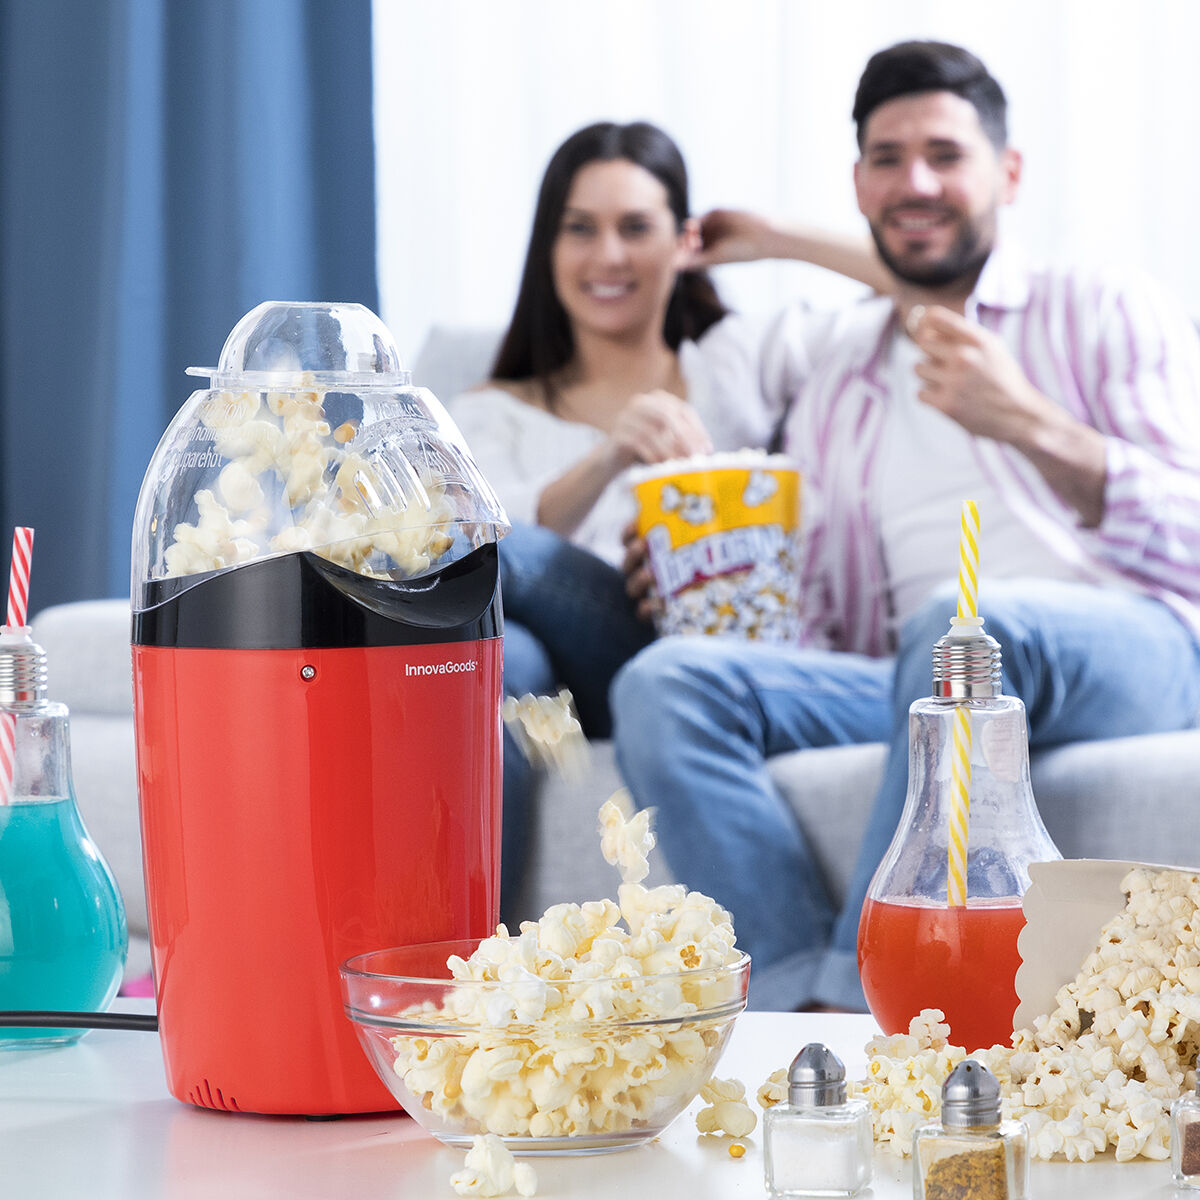 Heißluft-Popcornmaschine Popcot InnovaGoods - CA International 